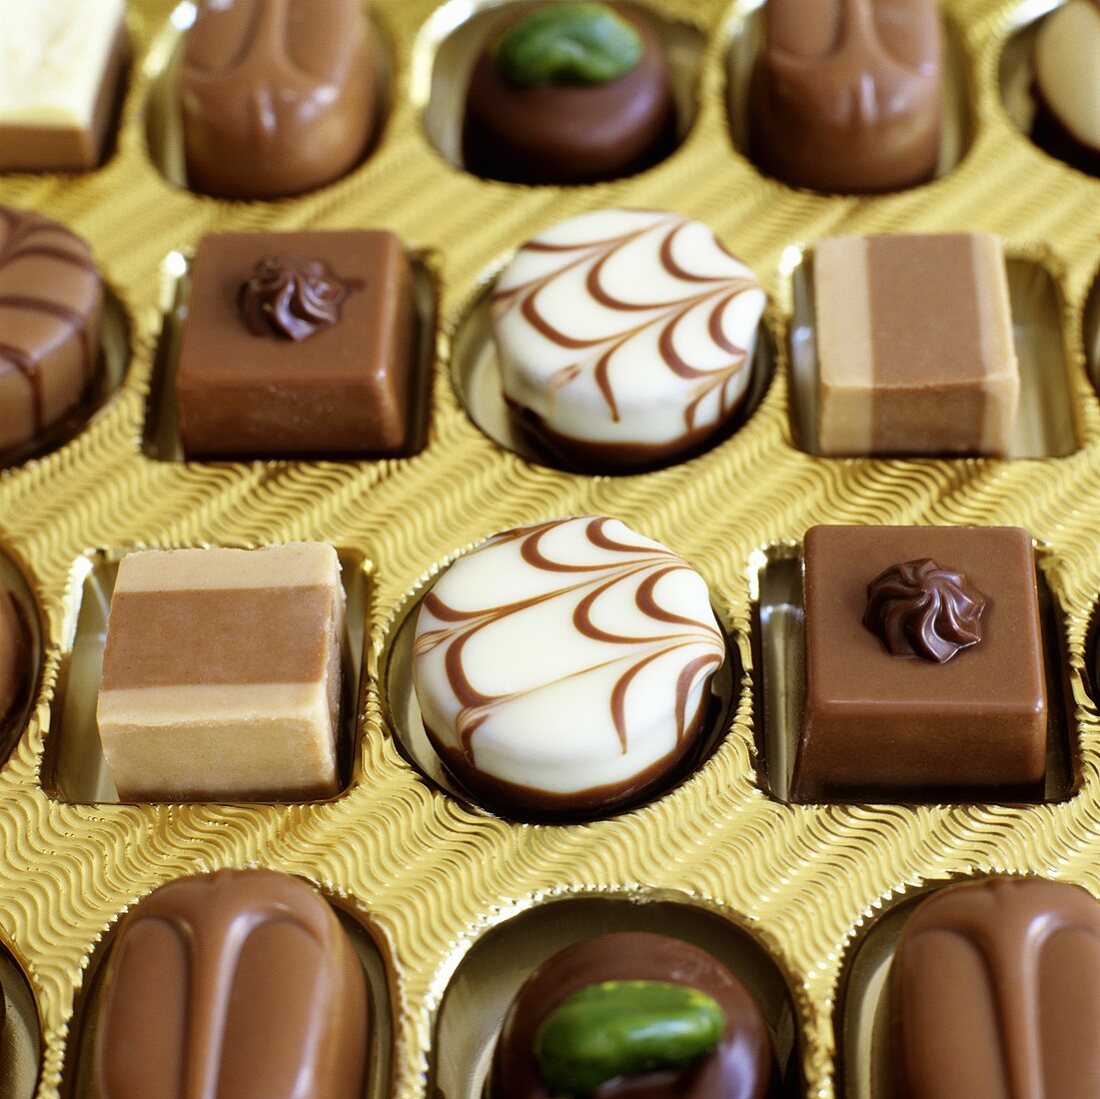 Assorted chocolates in chocolate box